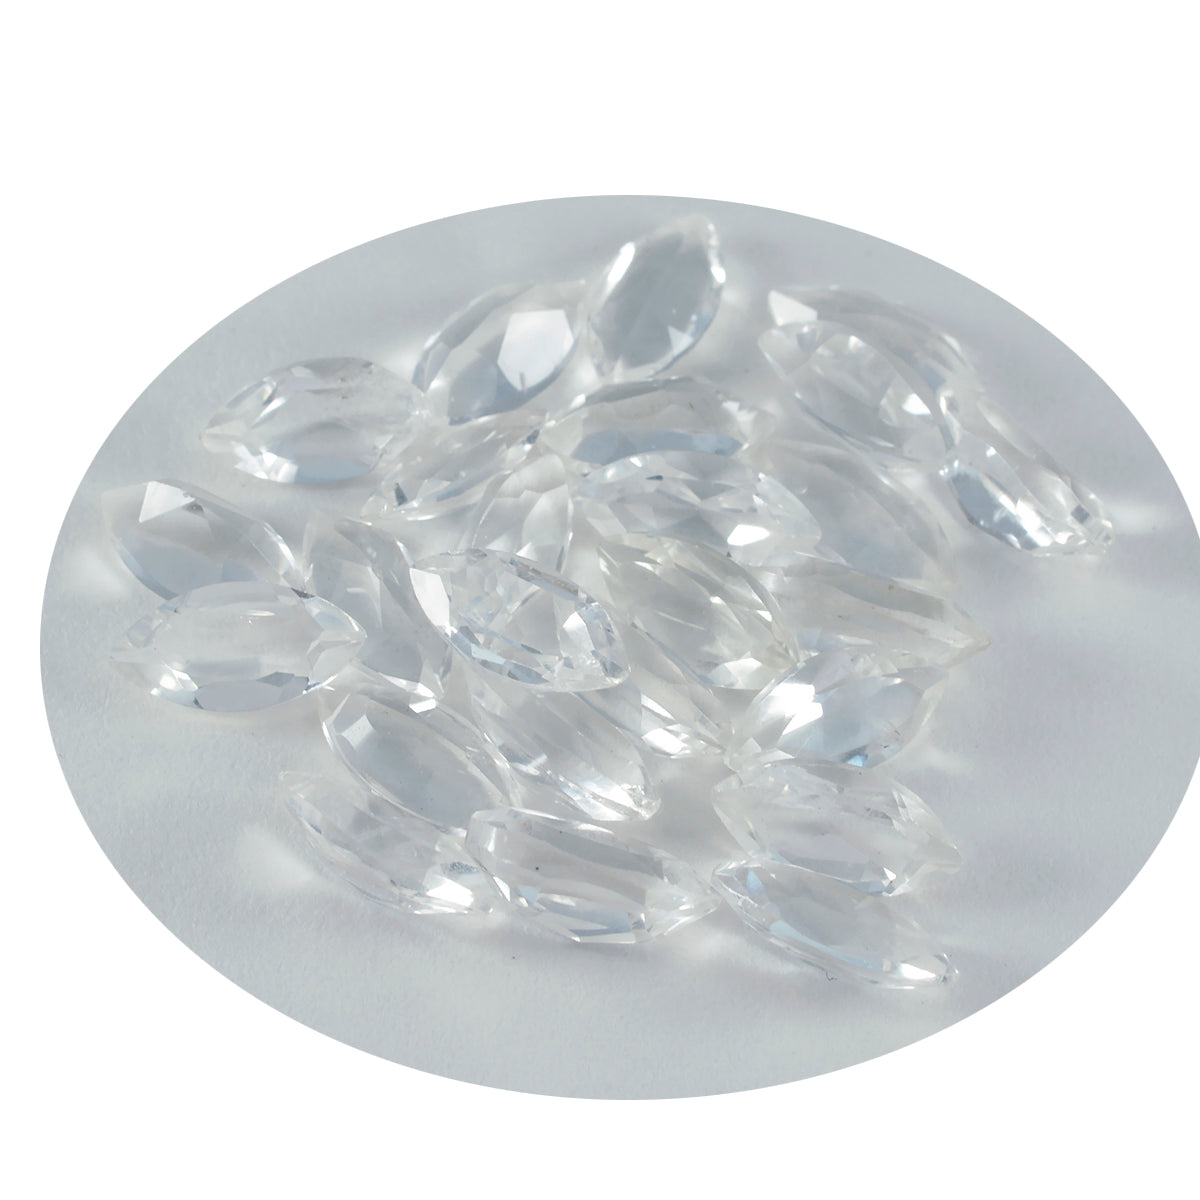 Riyogems 1PC White Crystal Quartz Faceted 4x8 mm Marquise Shape AA Quality Loose Gemstone